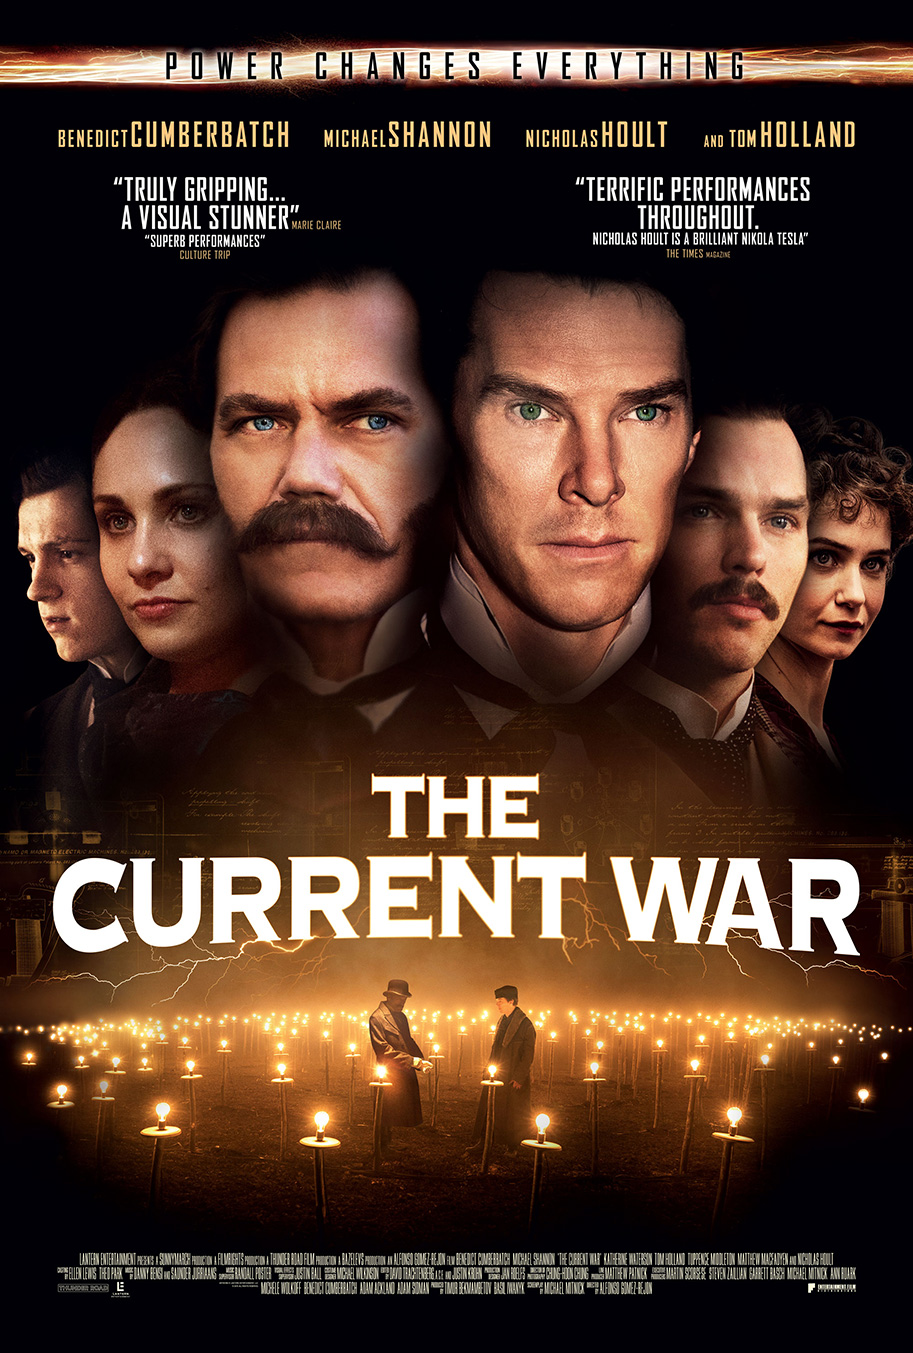 The Current War, Benedict Cumberbatch, Martin Scorsese